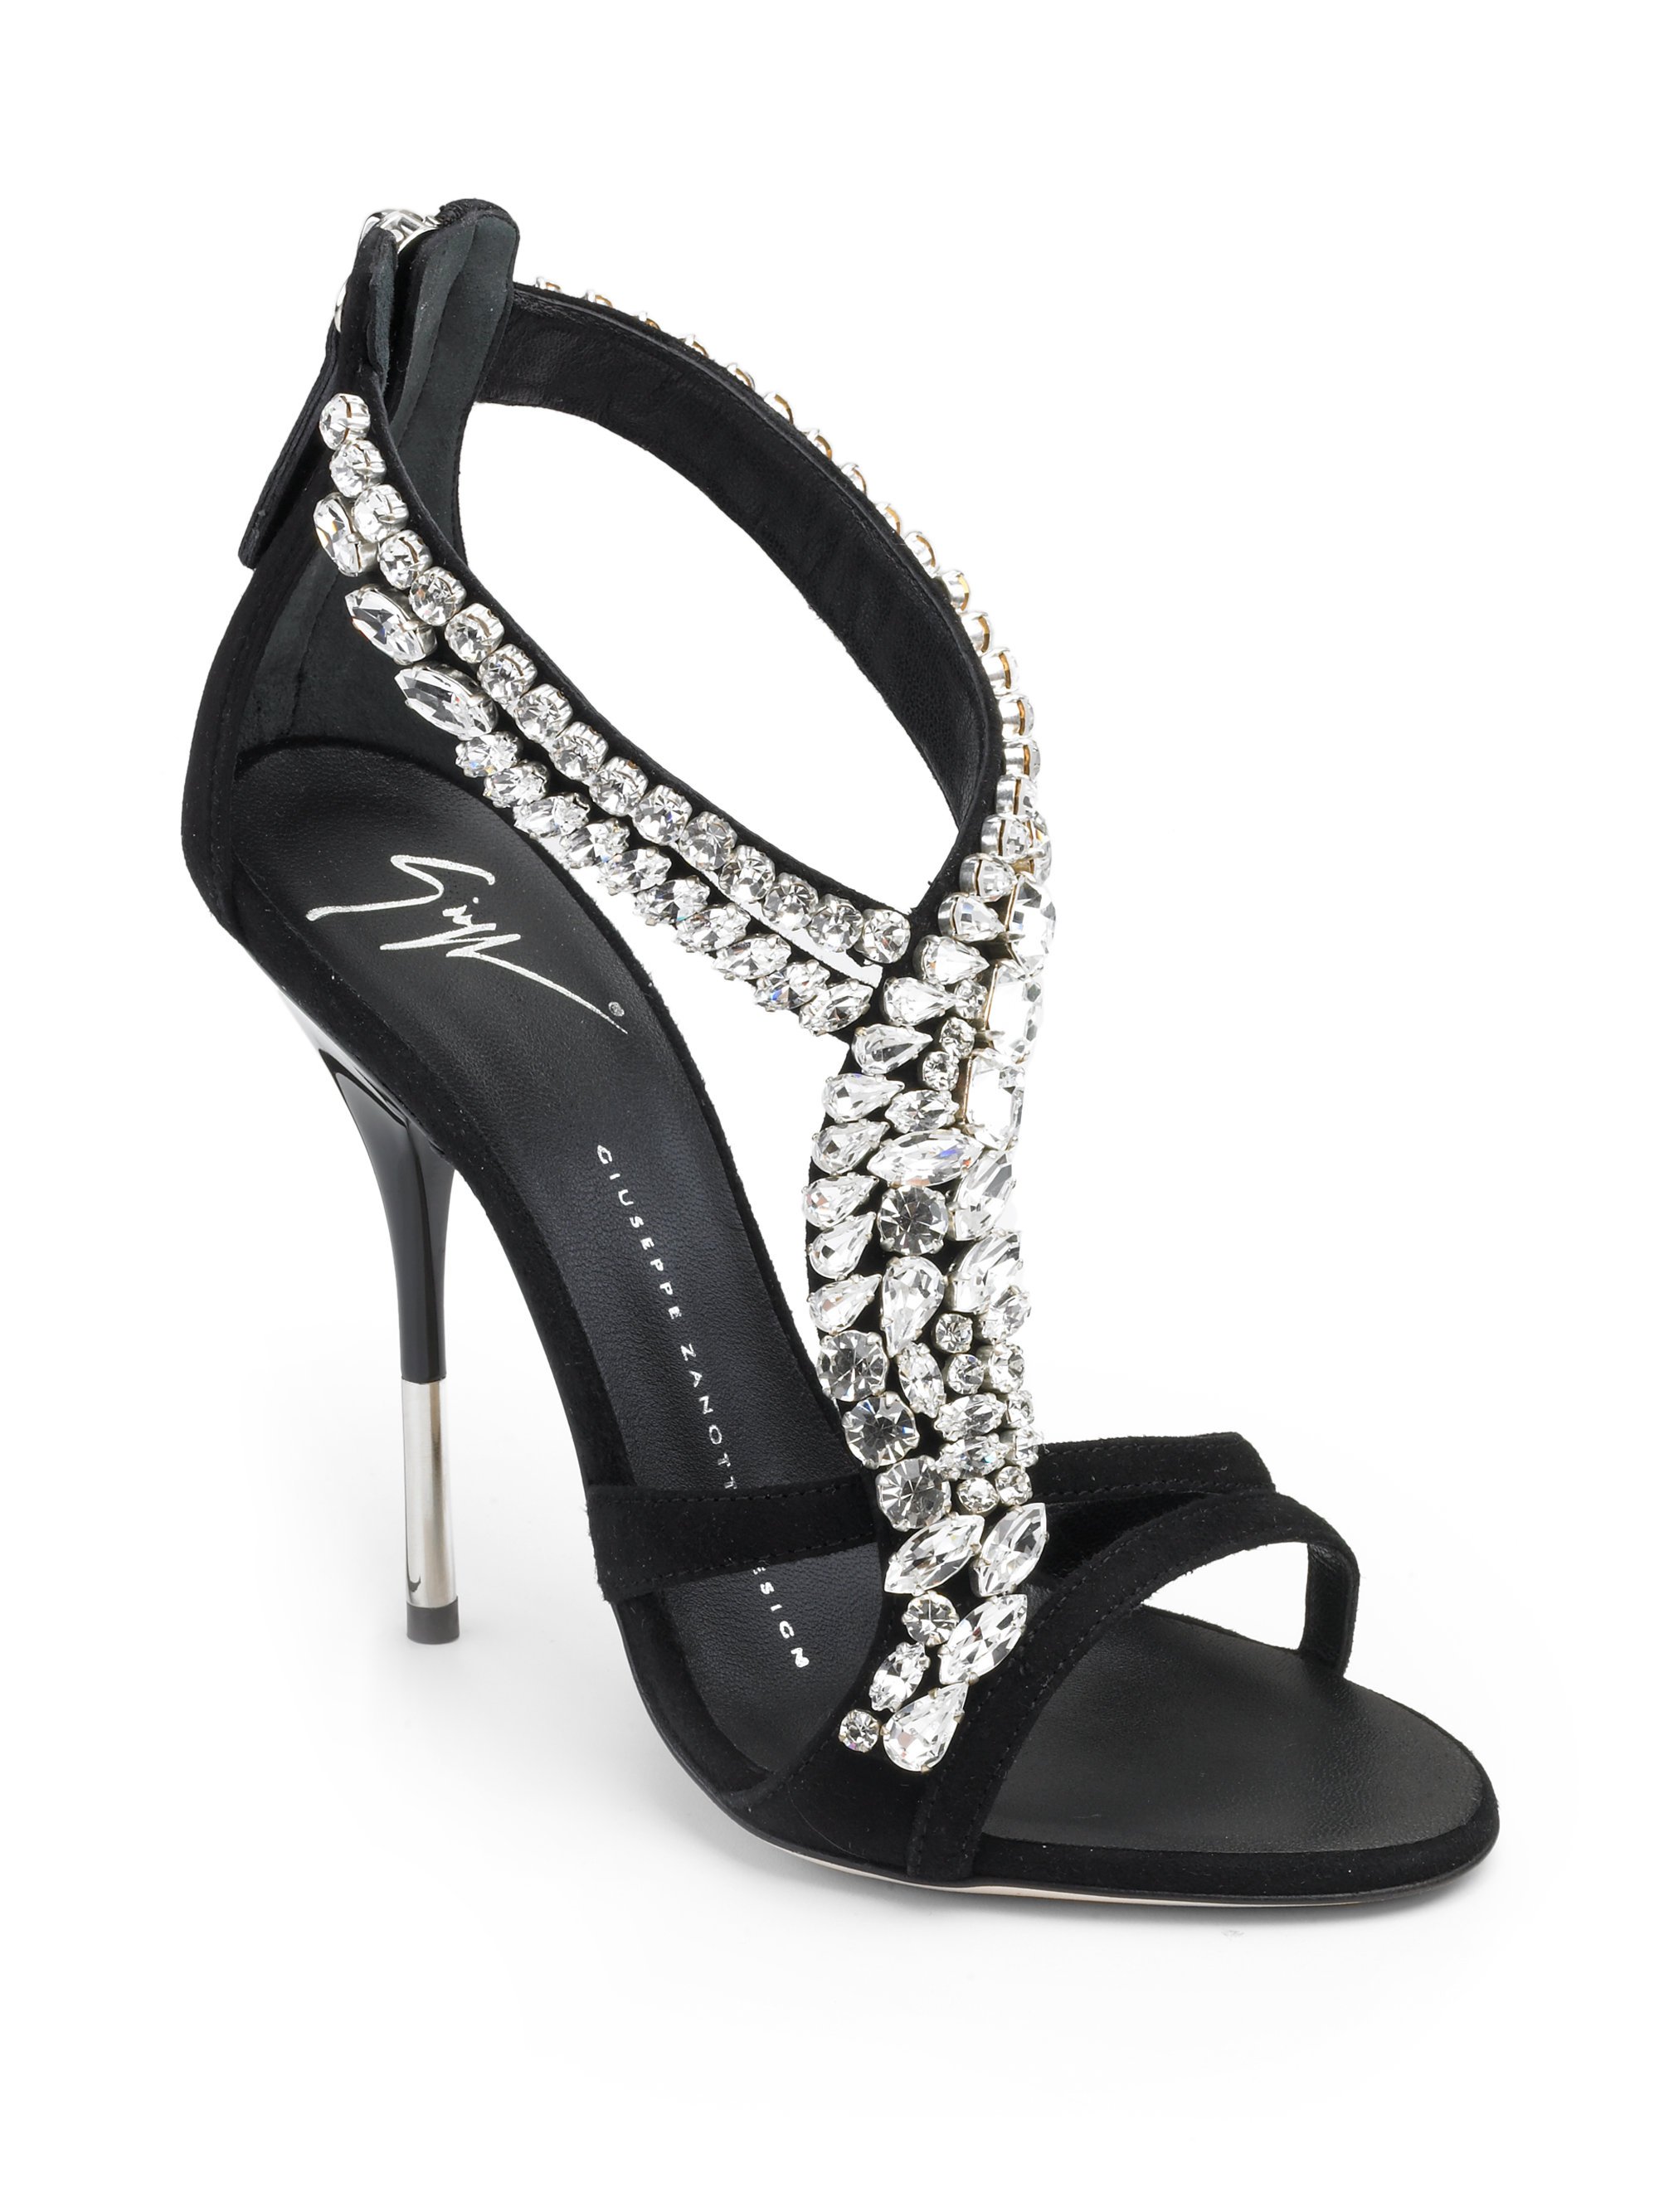 Lyst - Giuseppe Zanotti Jeweled Suede High Heel Sandals in Black